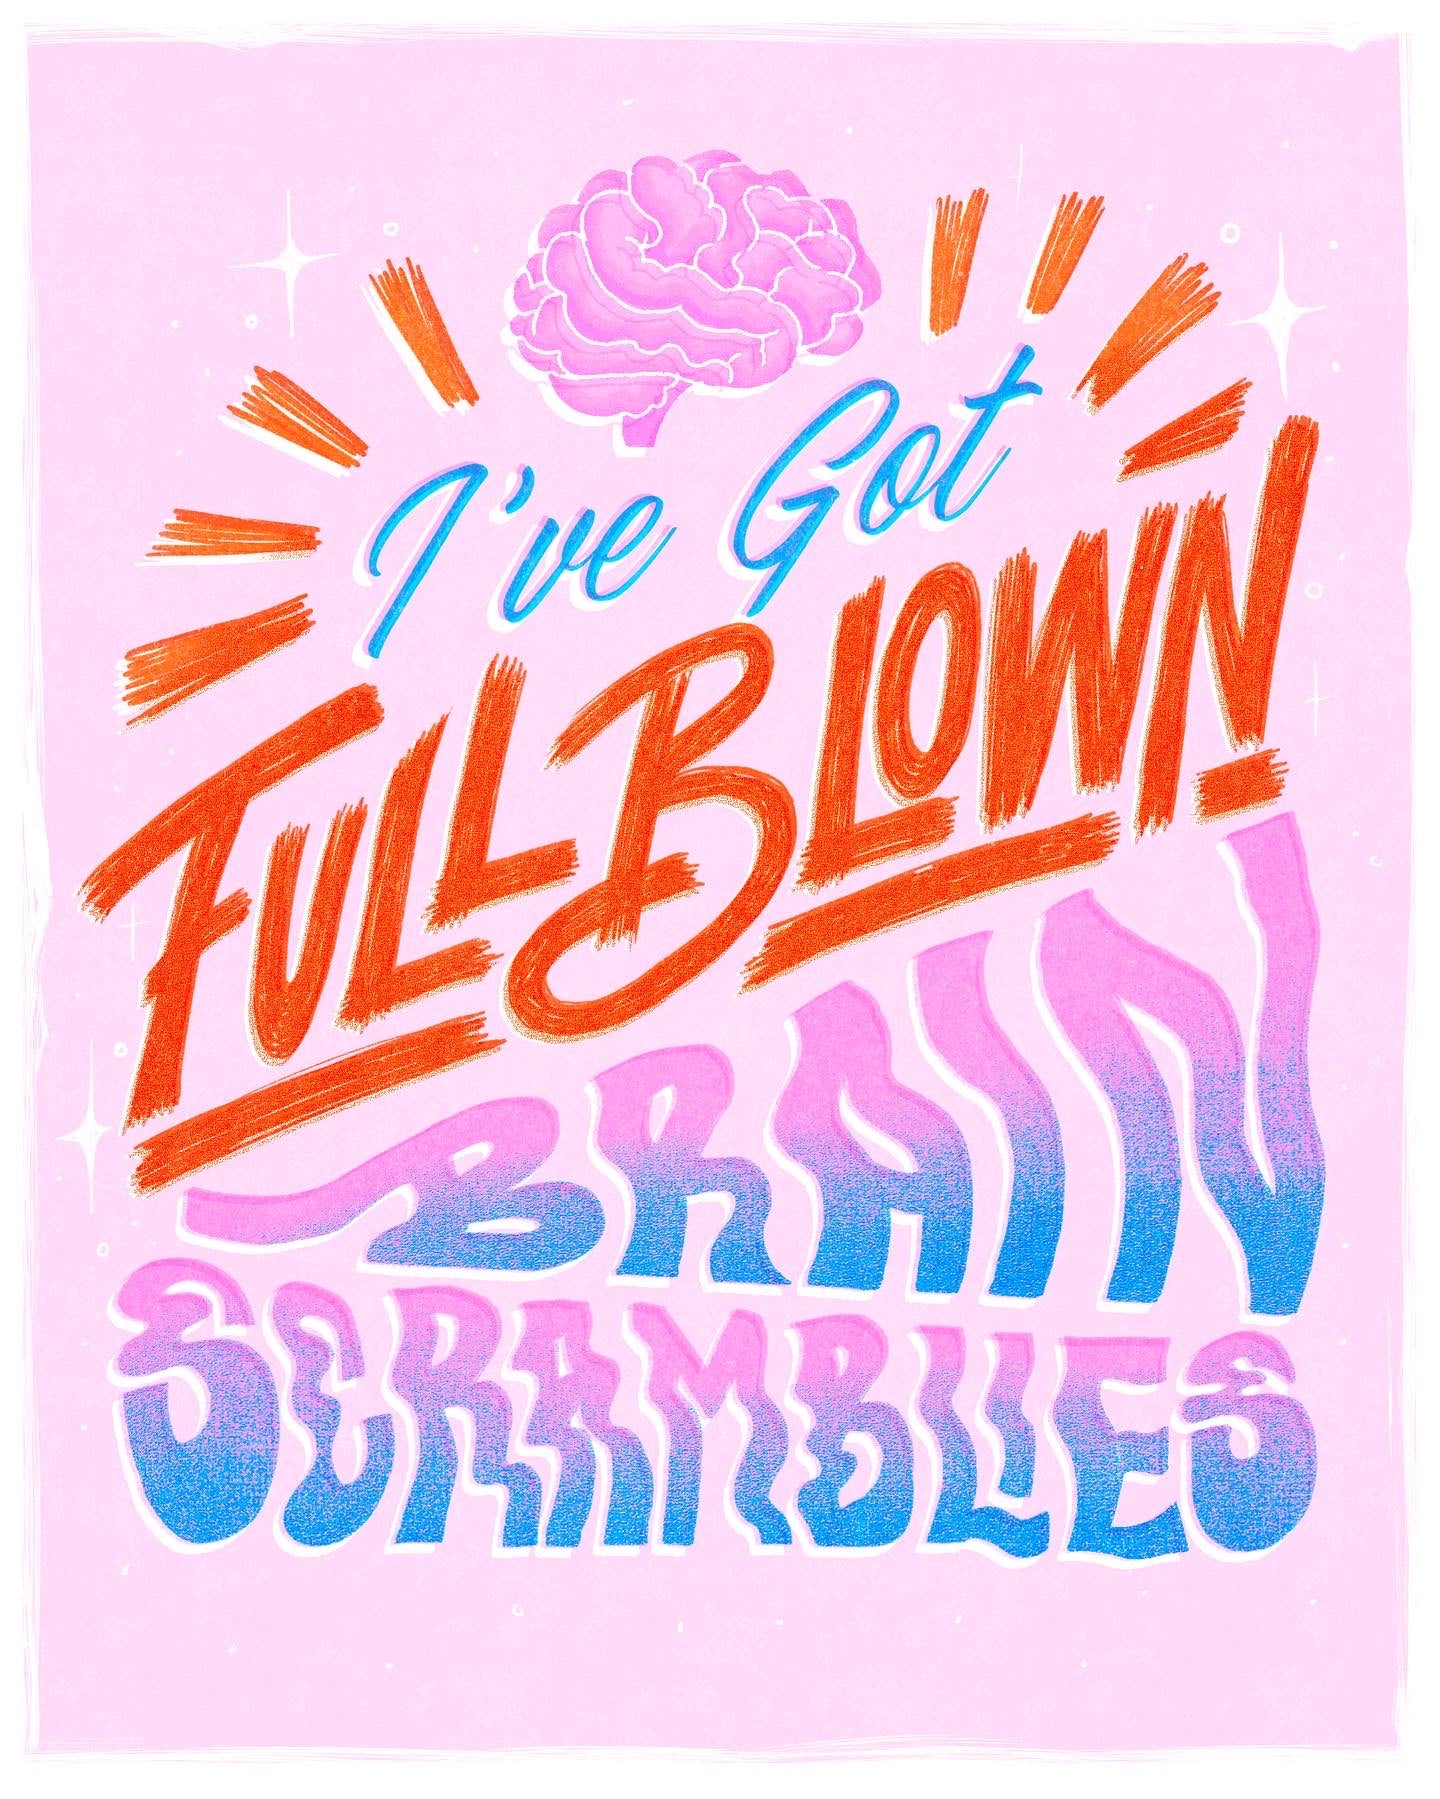 ‘I’ve got Full Blown Brain Scramblies’ Print